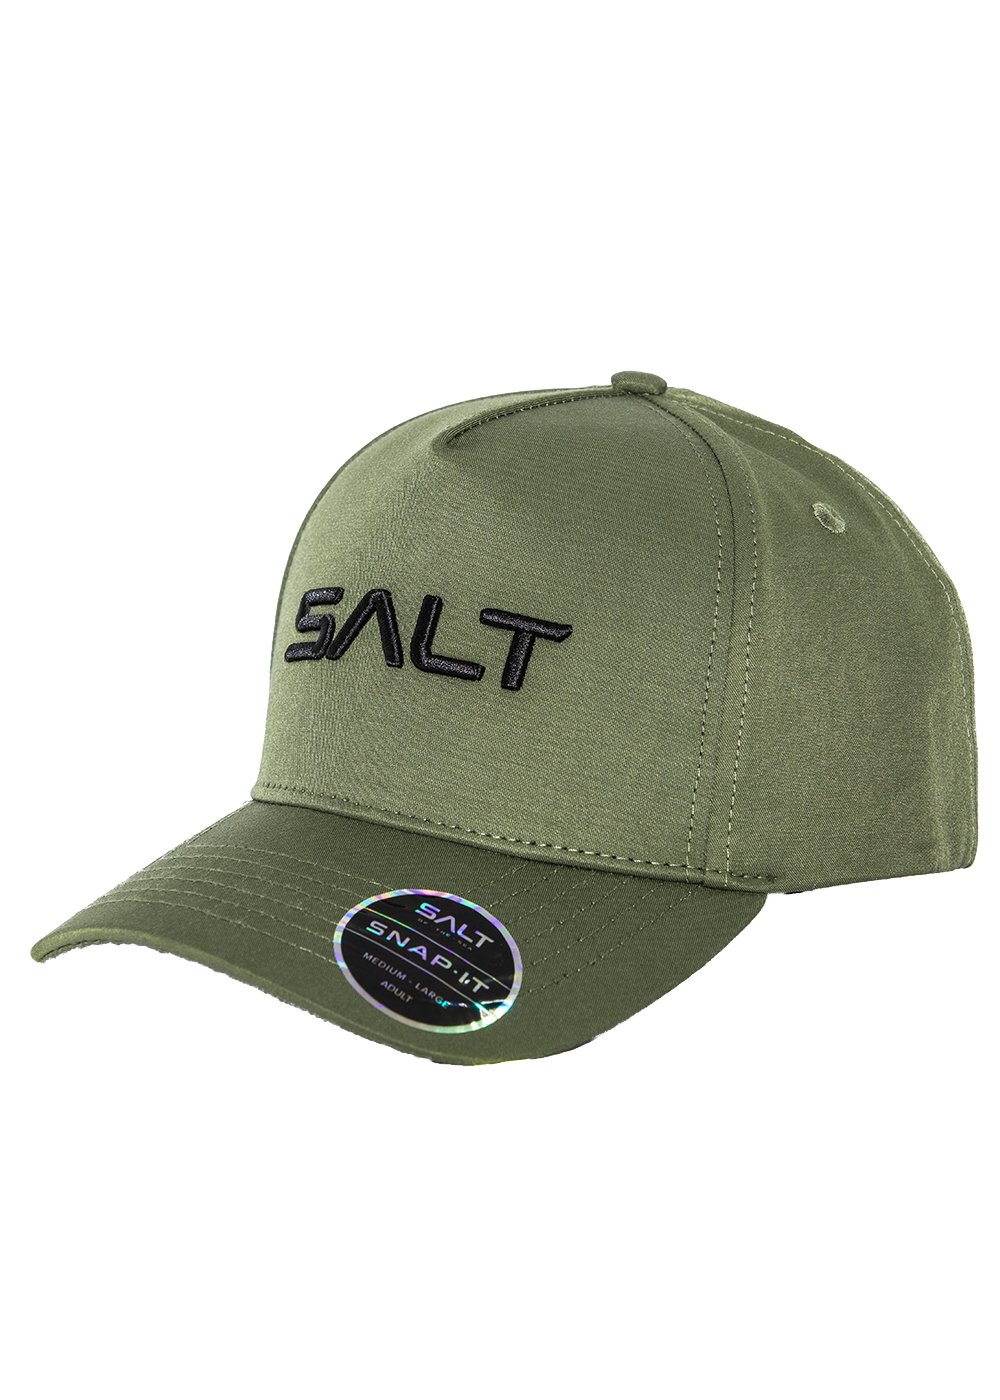 Salt Snapback Cap - Embroidered Salt Logo